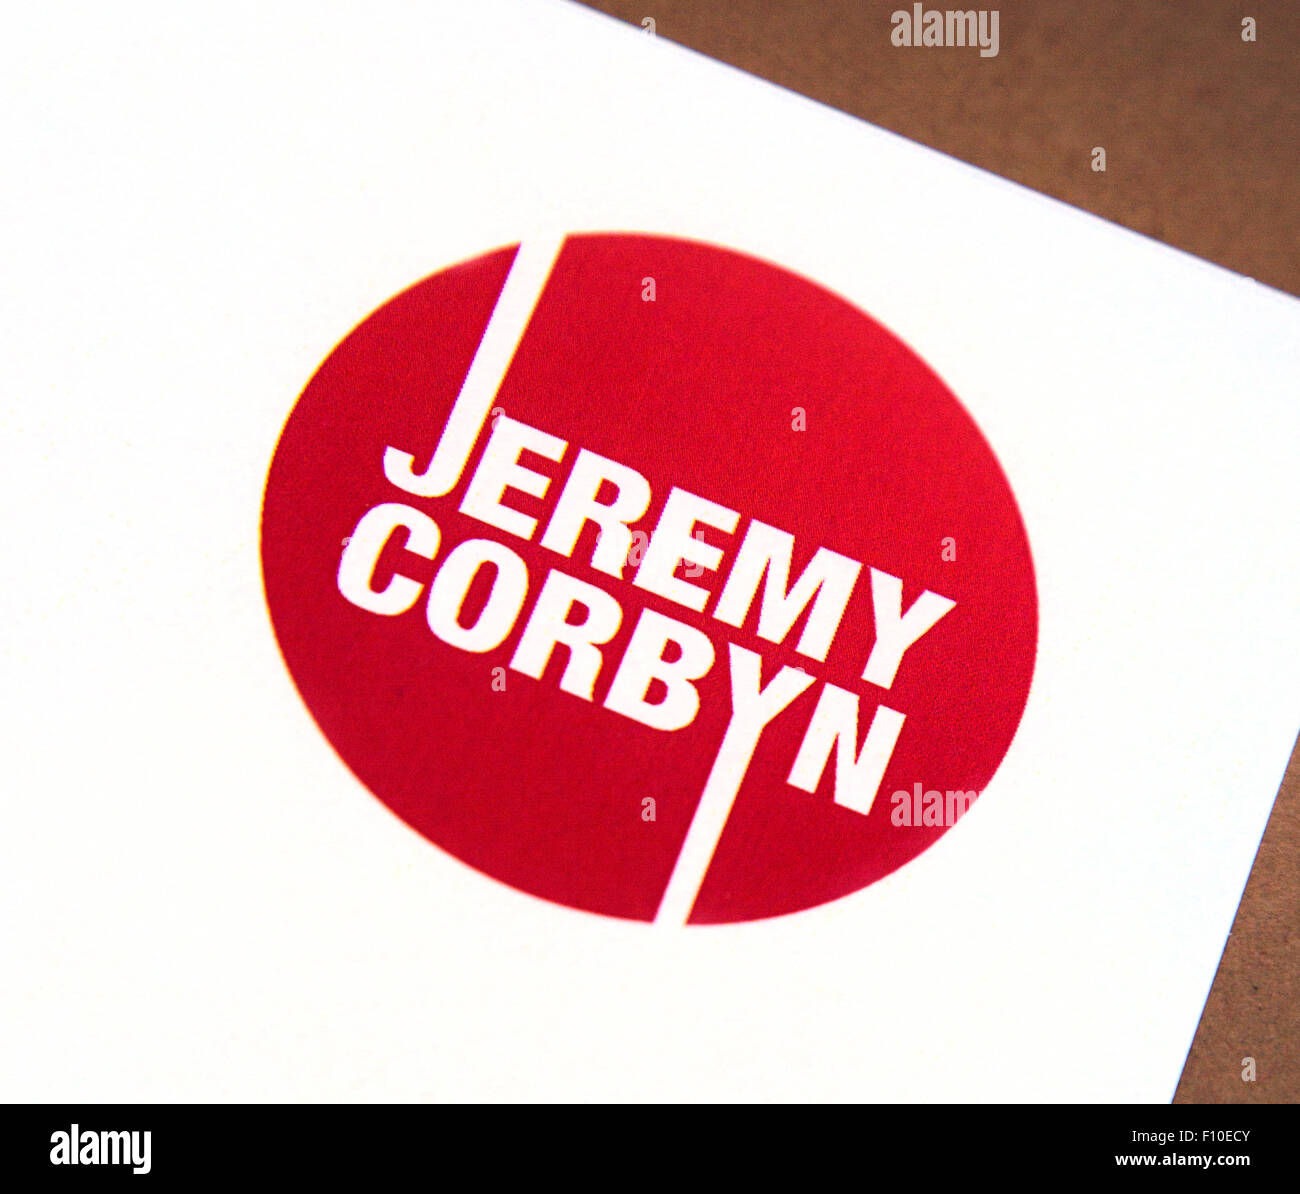 Jeremy Corbyn Labour Party leadership campaign logo, London Stock Photo